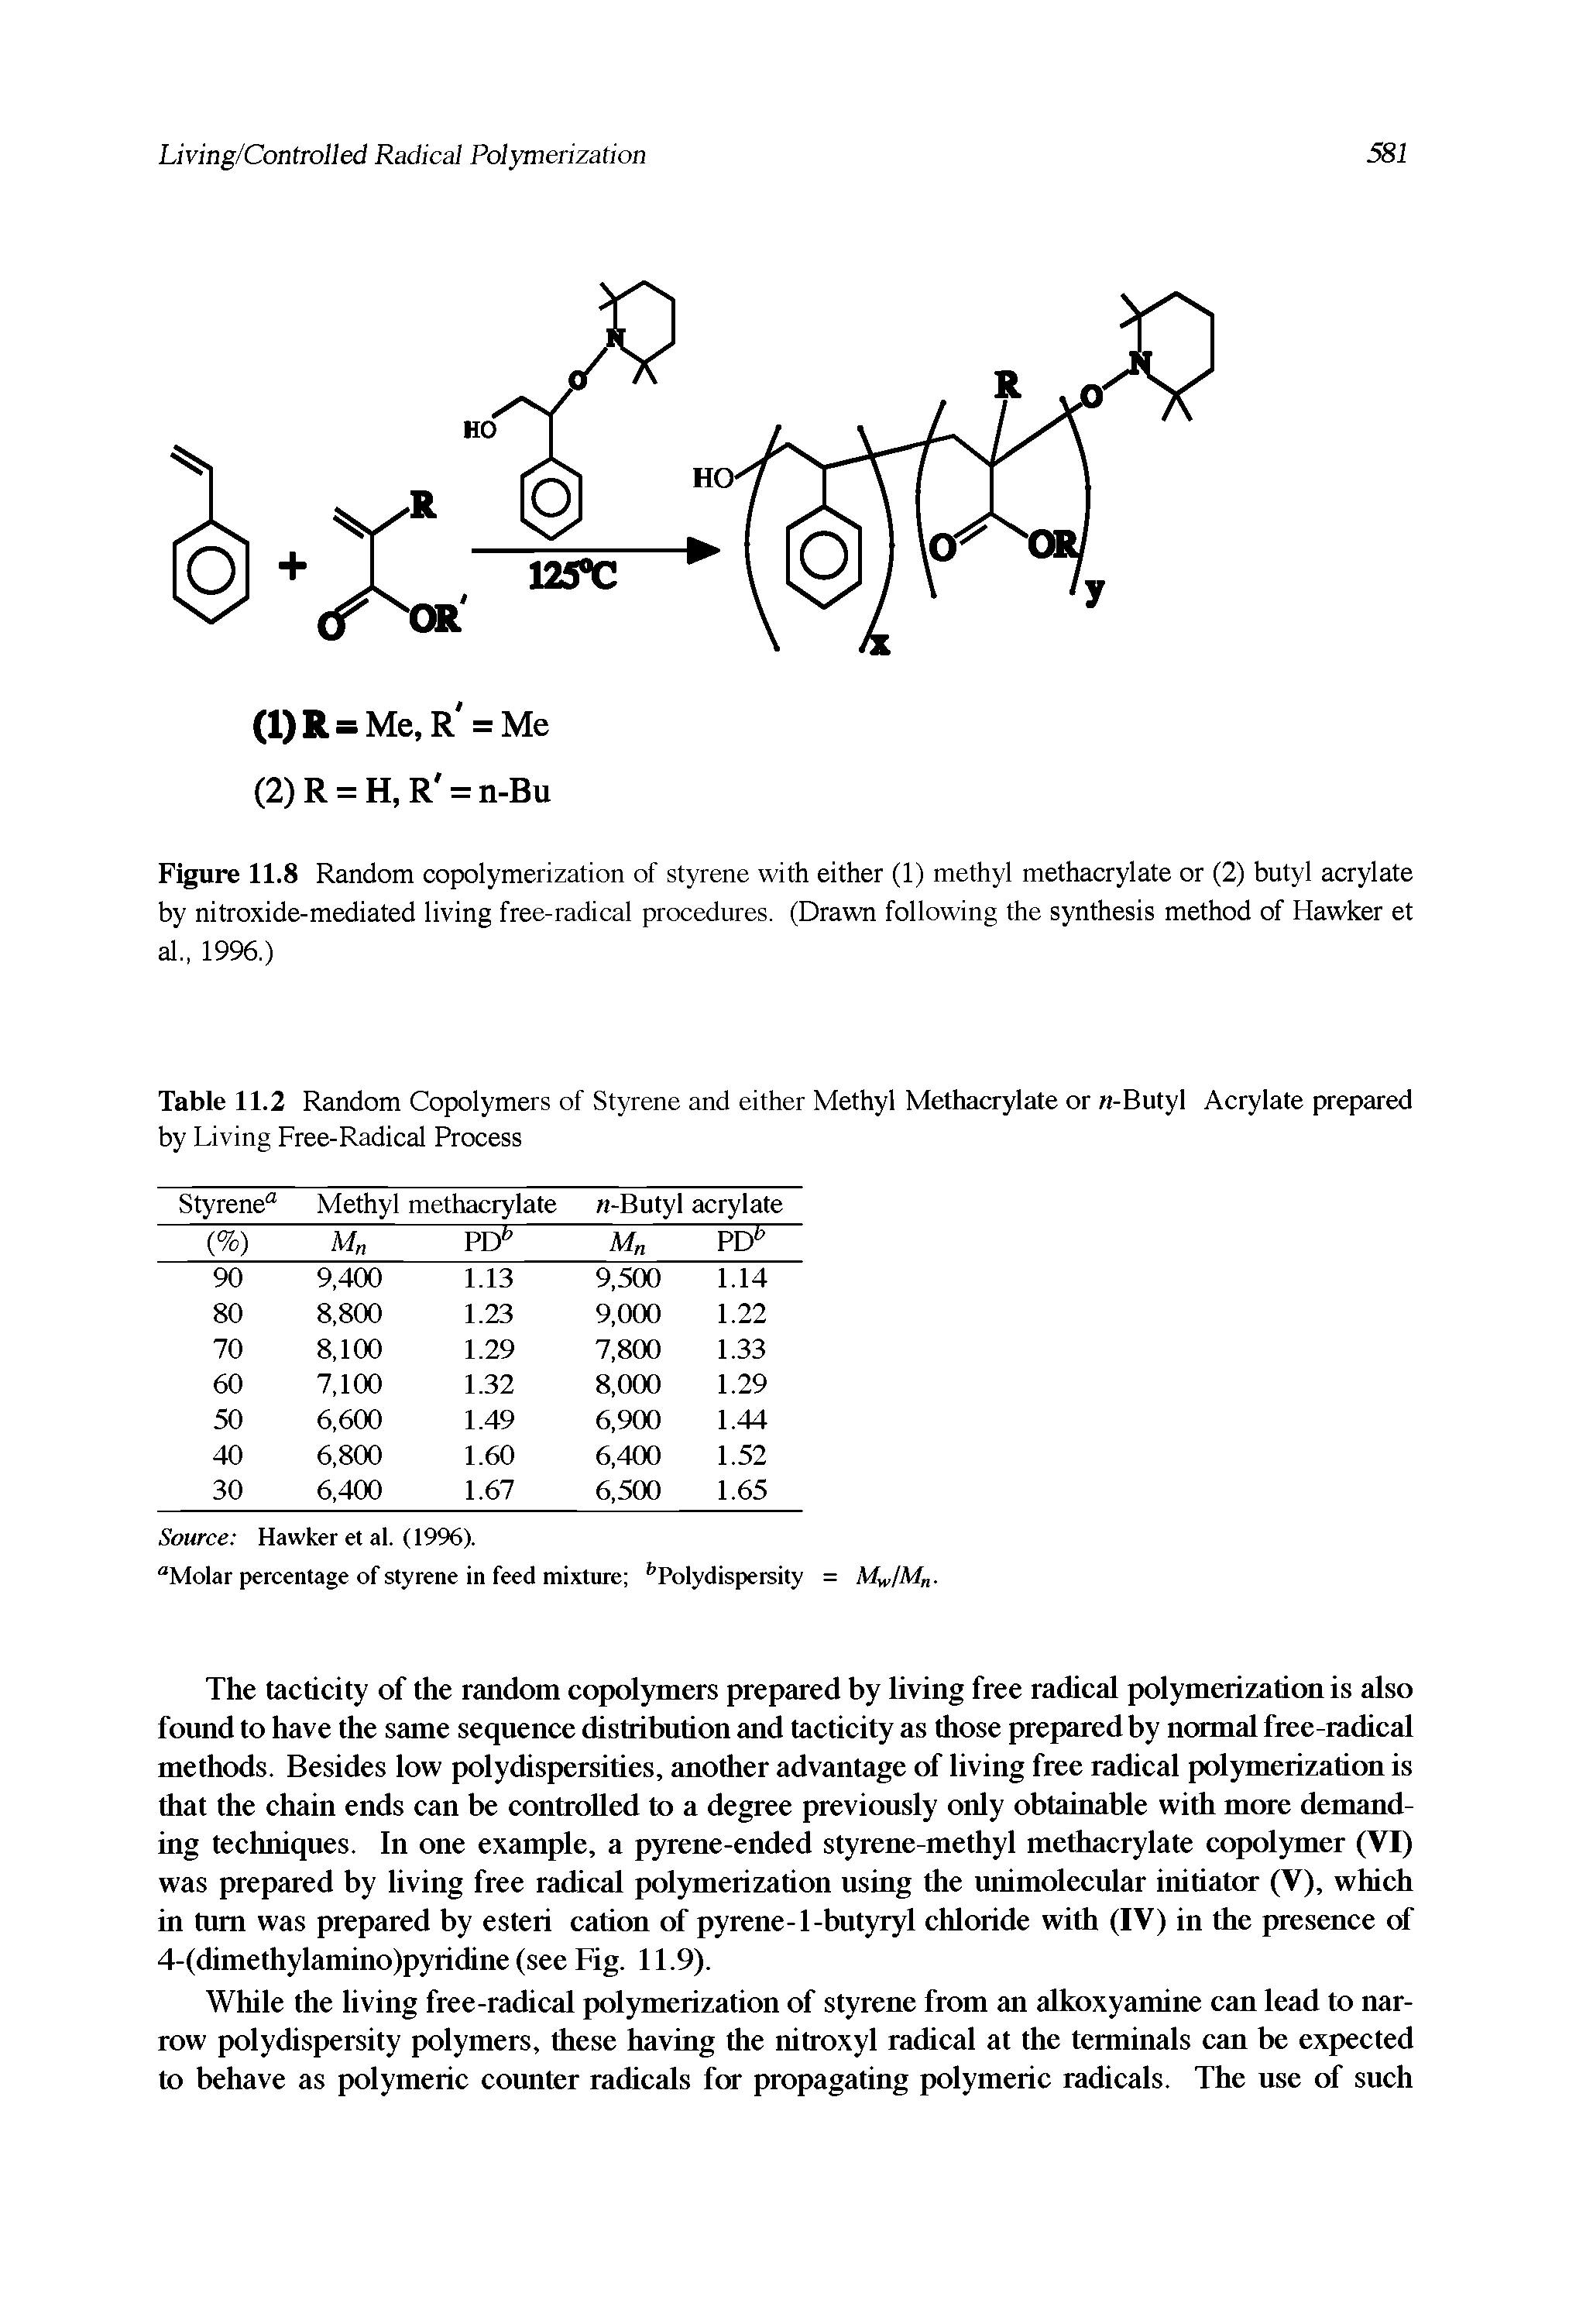 Table 11.2 Random Copolymers of Styrene and either Methyl Methacrylate or n-Butyl Acrylate prepared...